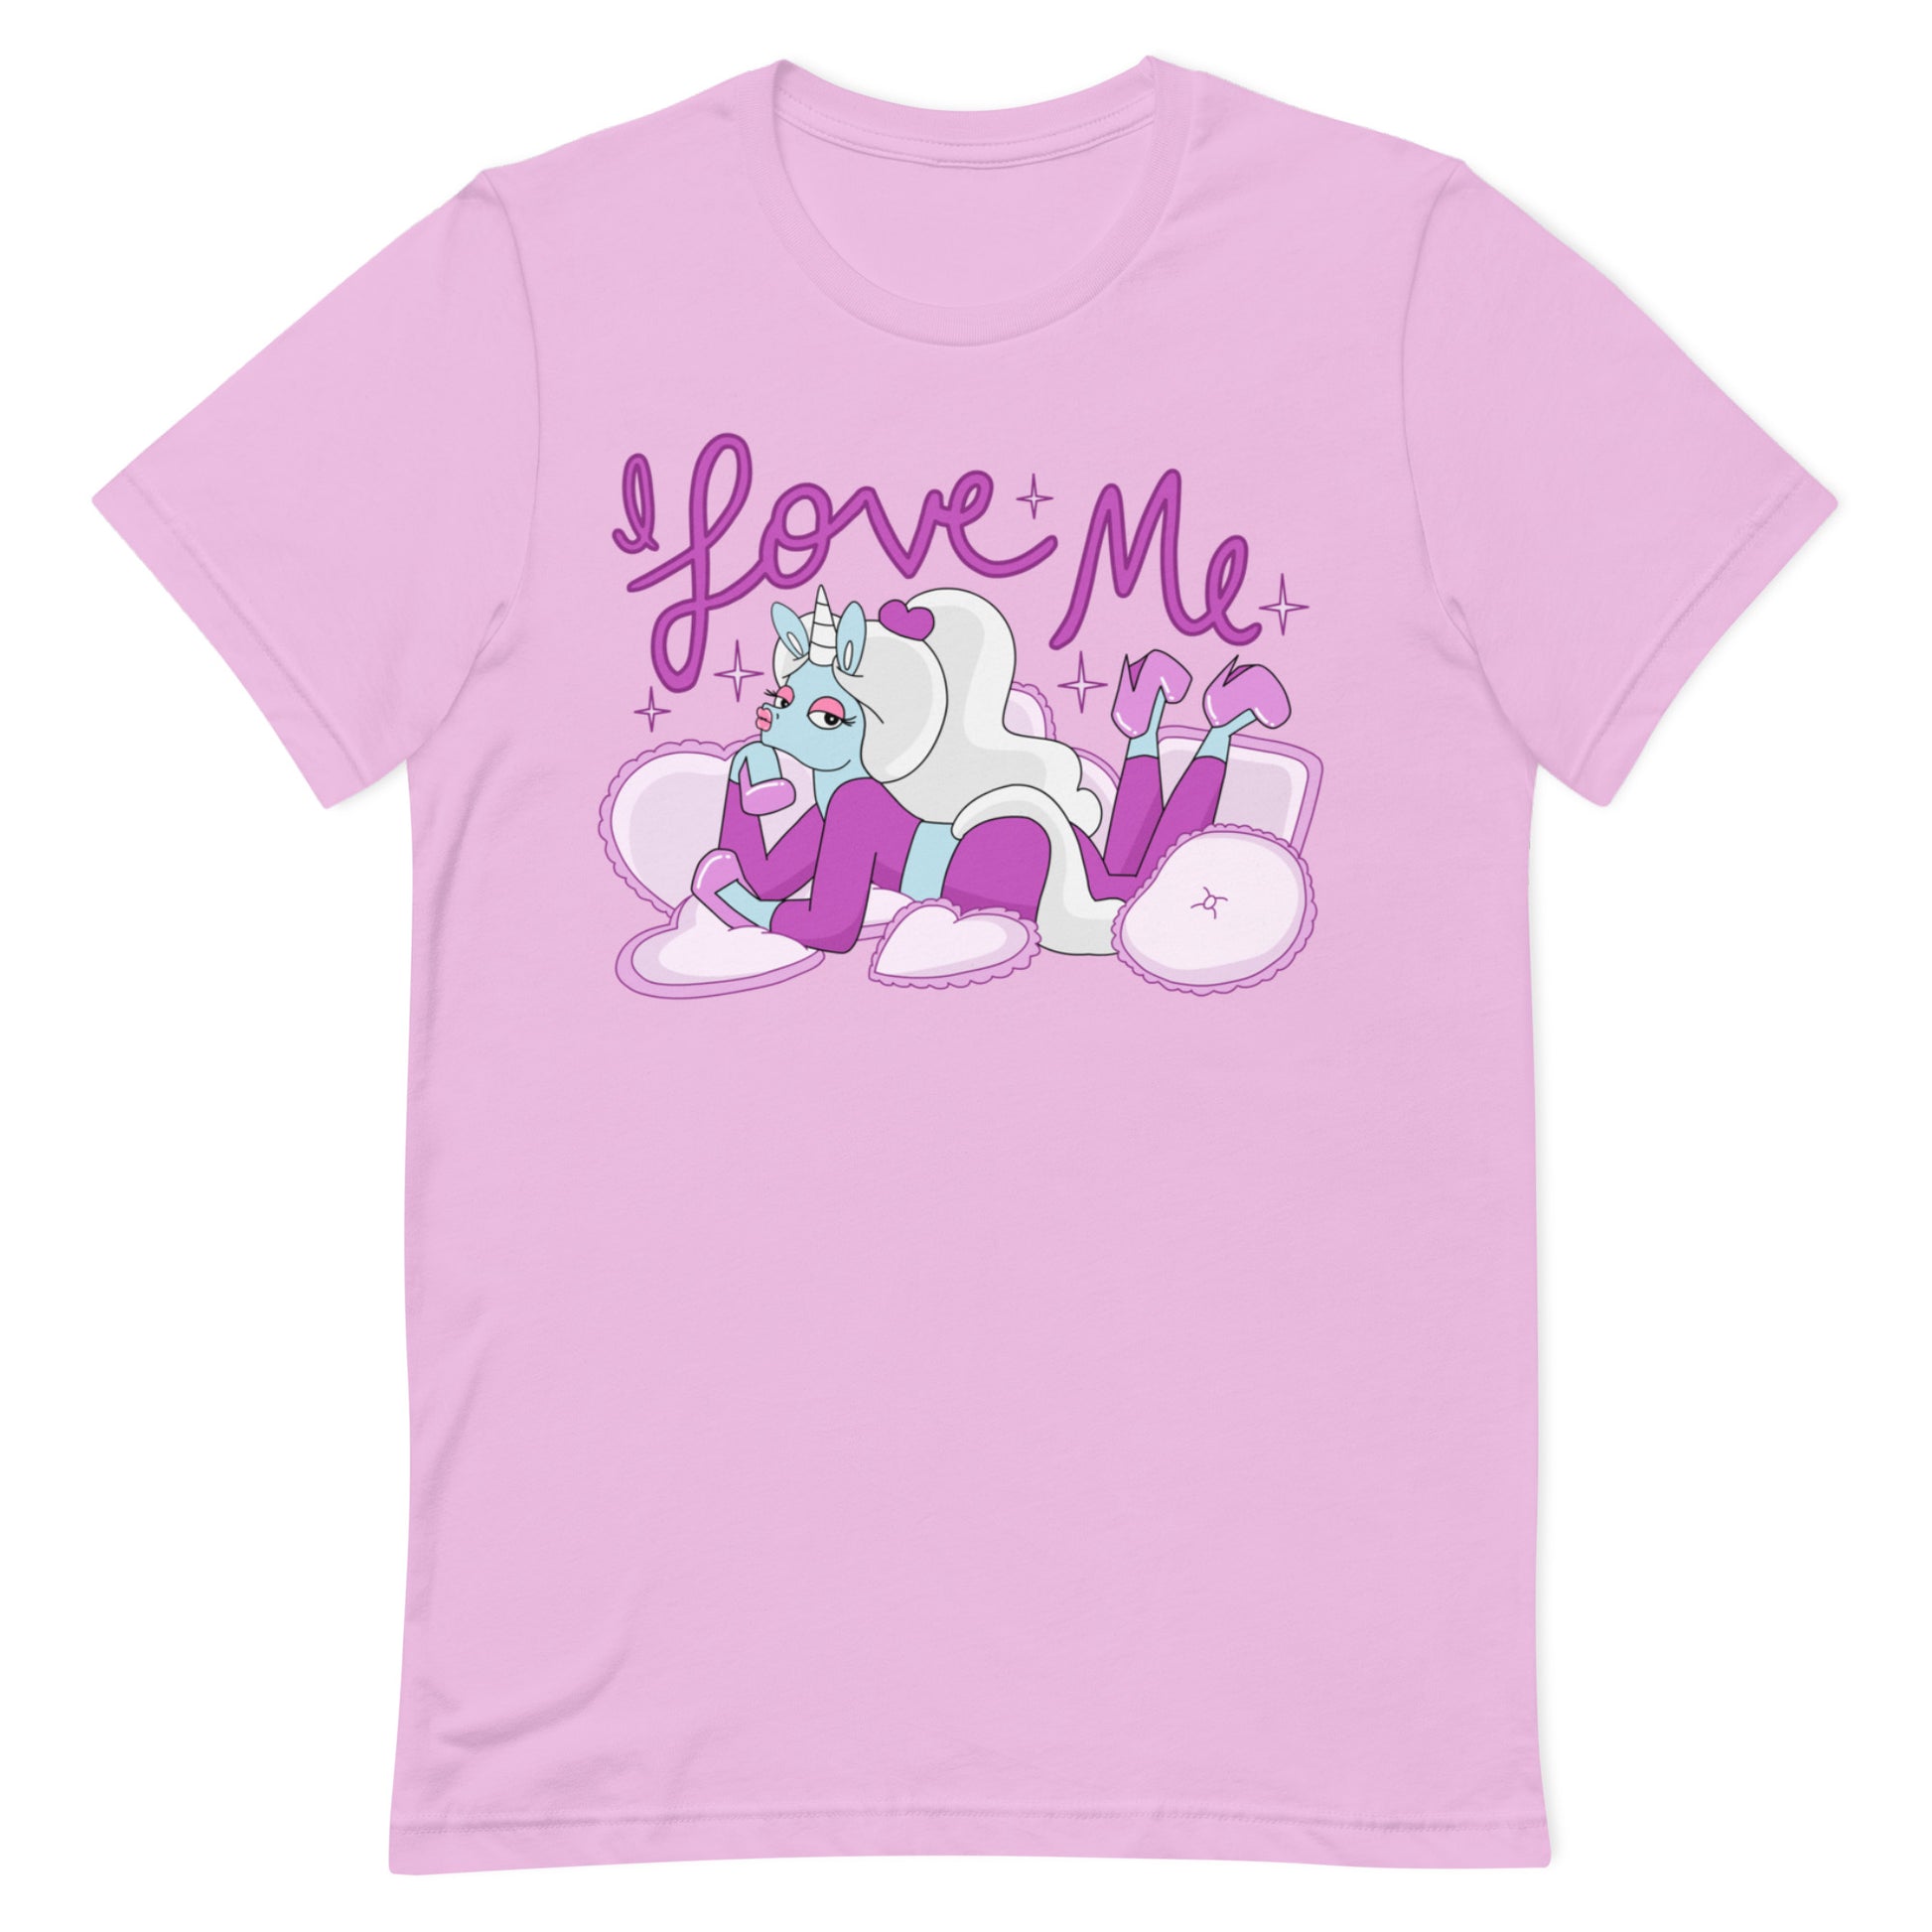 I love me lilac tee shirt with glow the unicorn